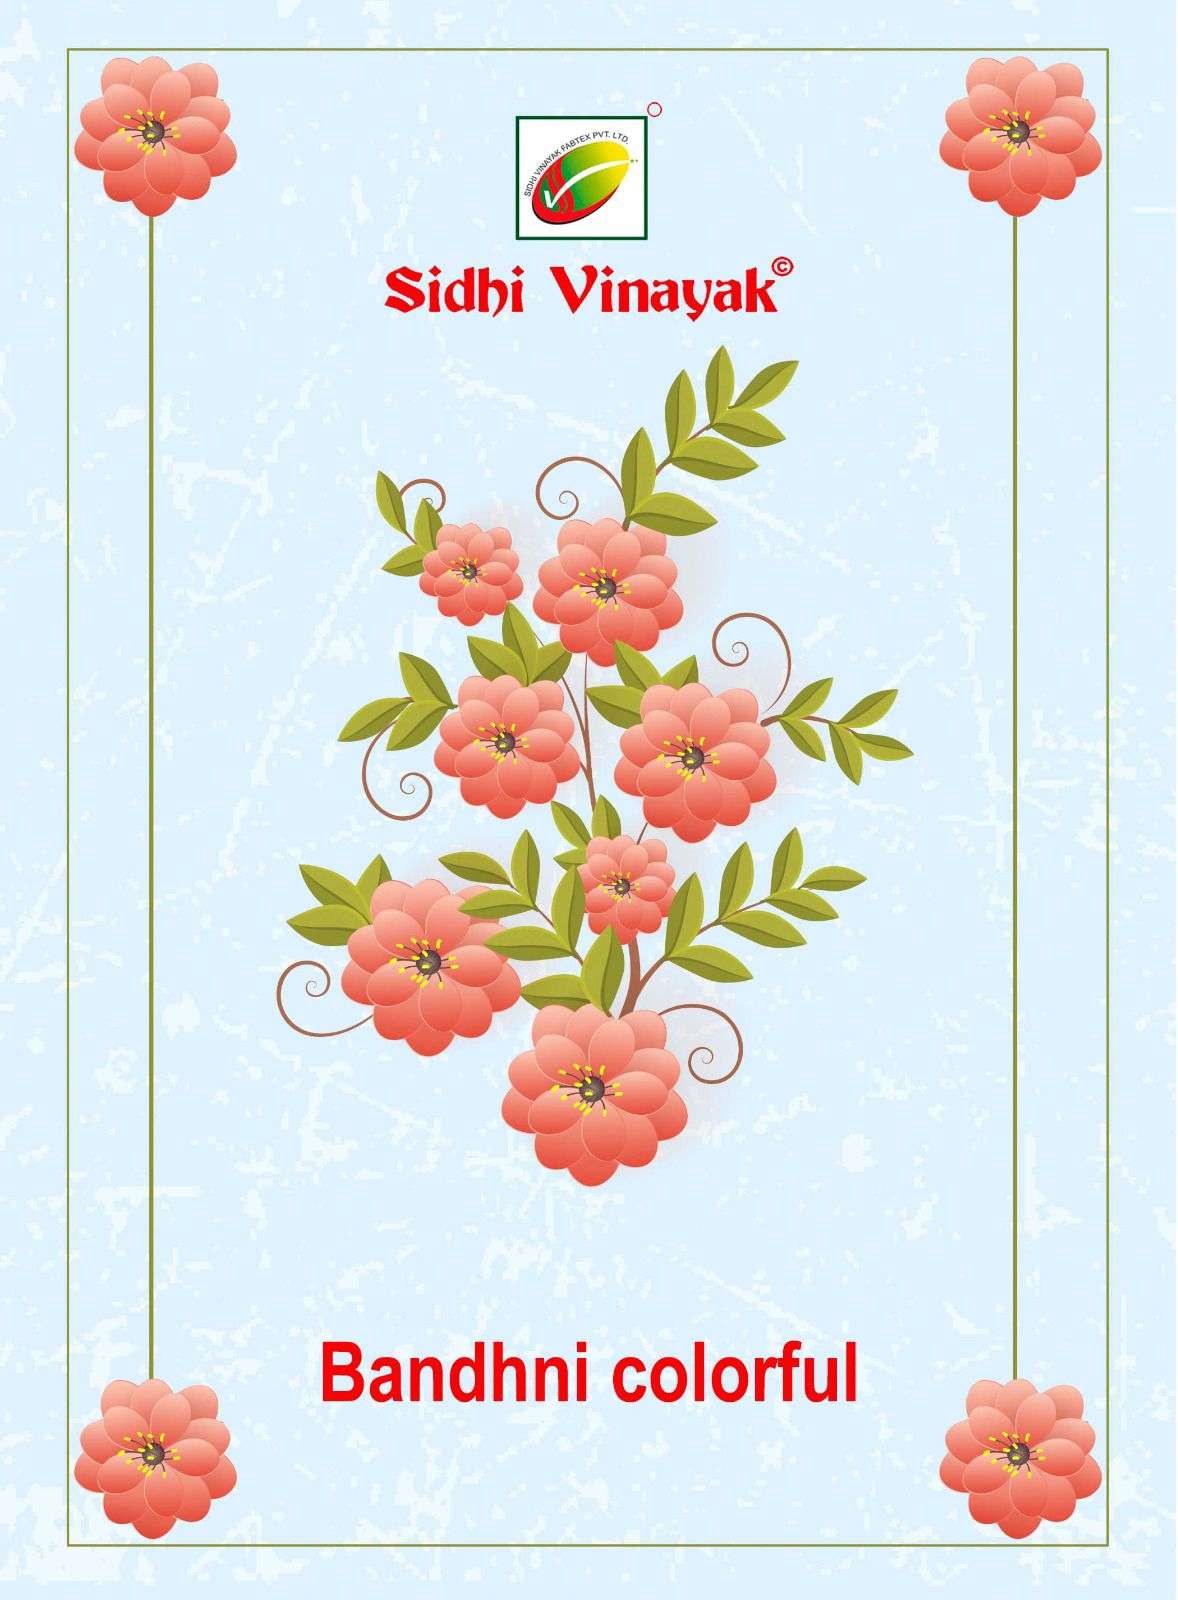 Siddhi Vinayak Bandhni Colorful Fancy Cotton Bandhni Dress Catalog Exporter